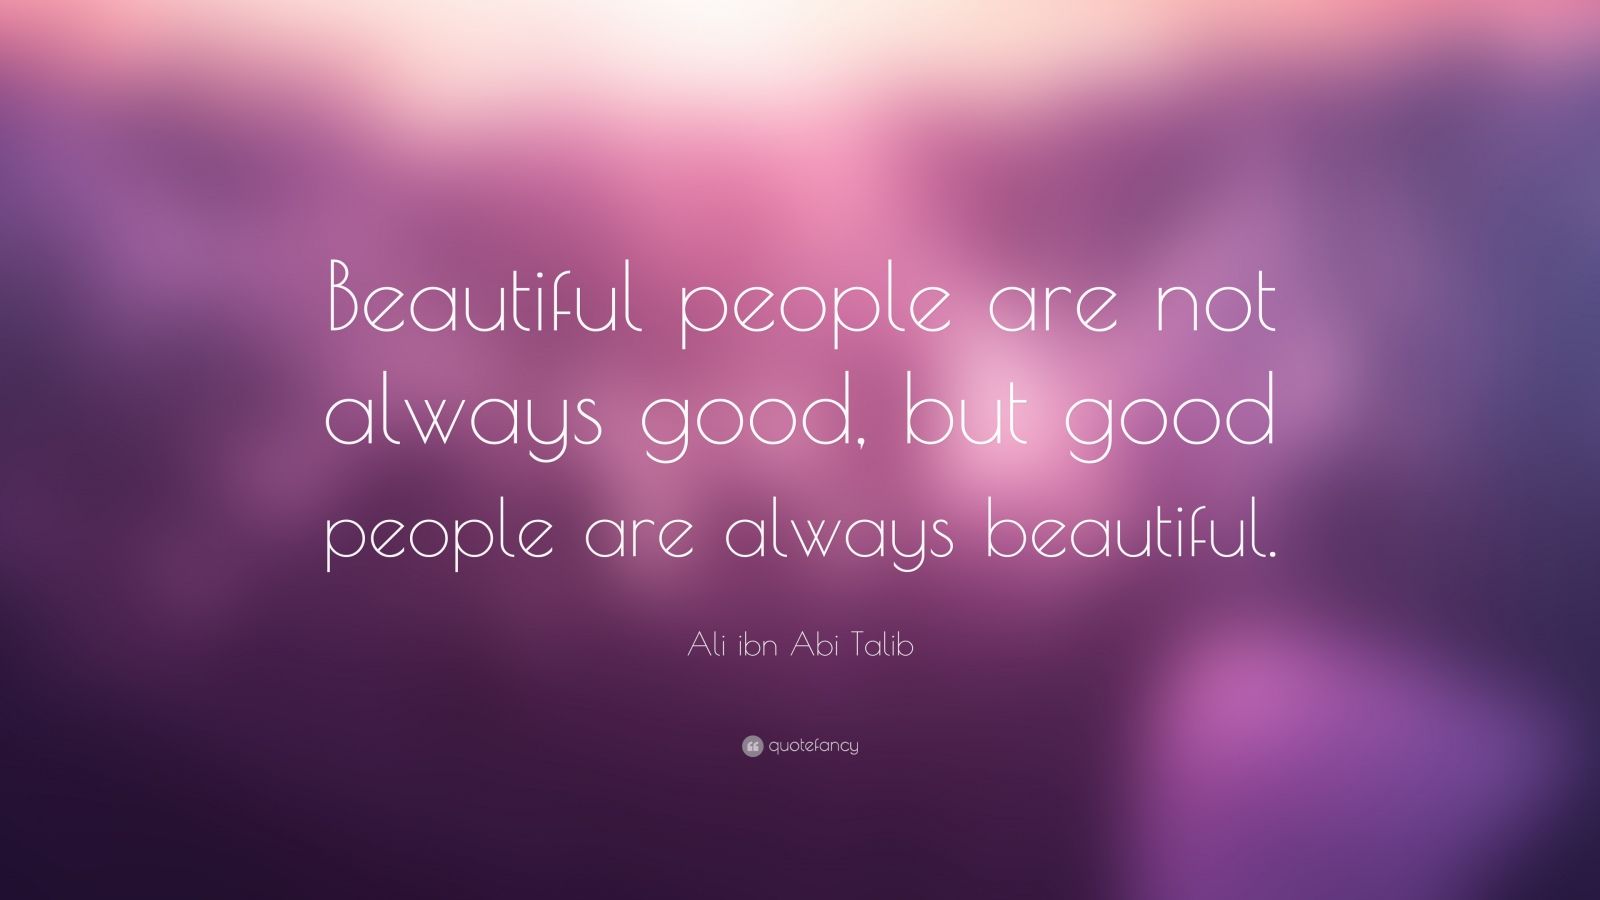 Ali ibn Abi Talib Quote: “Beautiful people are not always good, but good  people are always beautiful.”